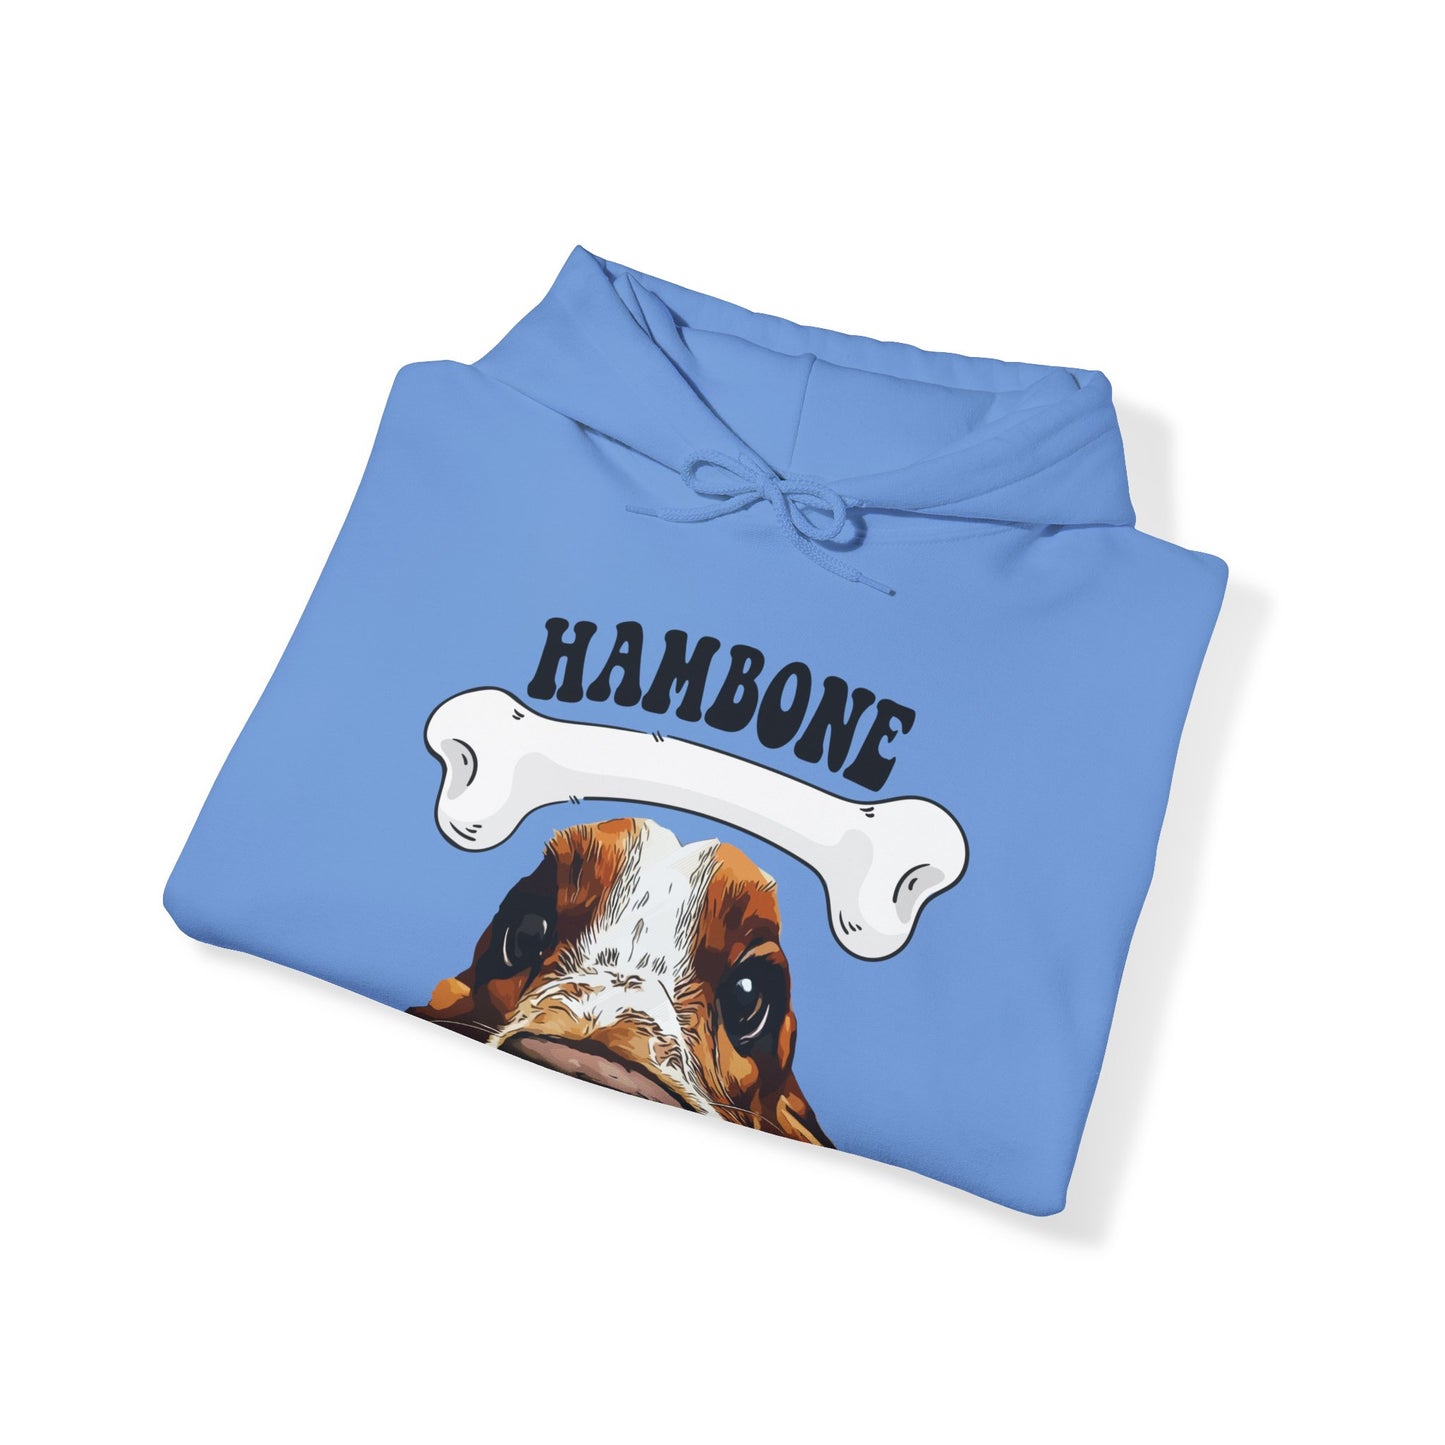 Hambone Hoodie